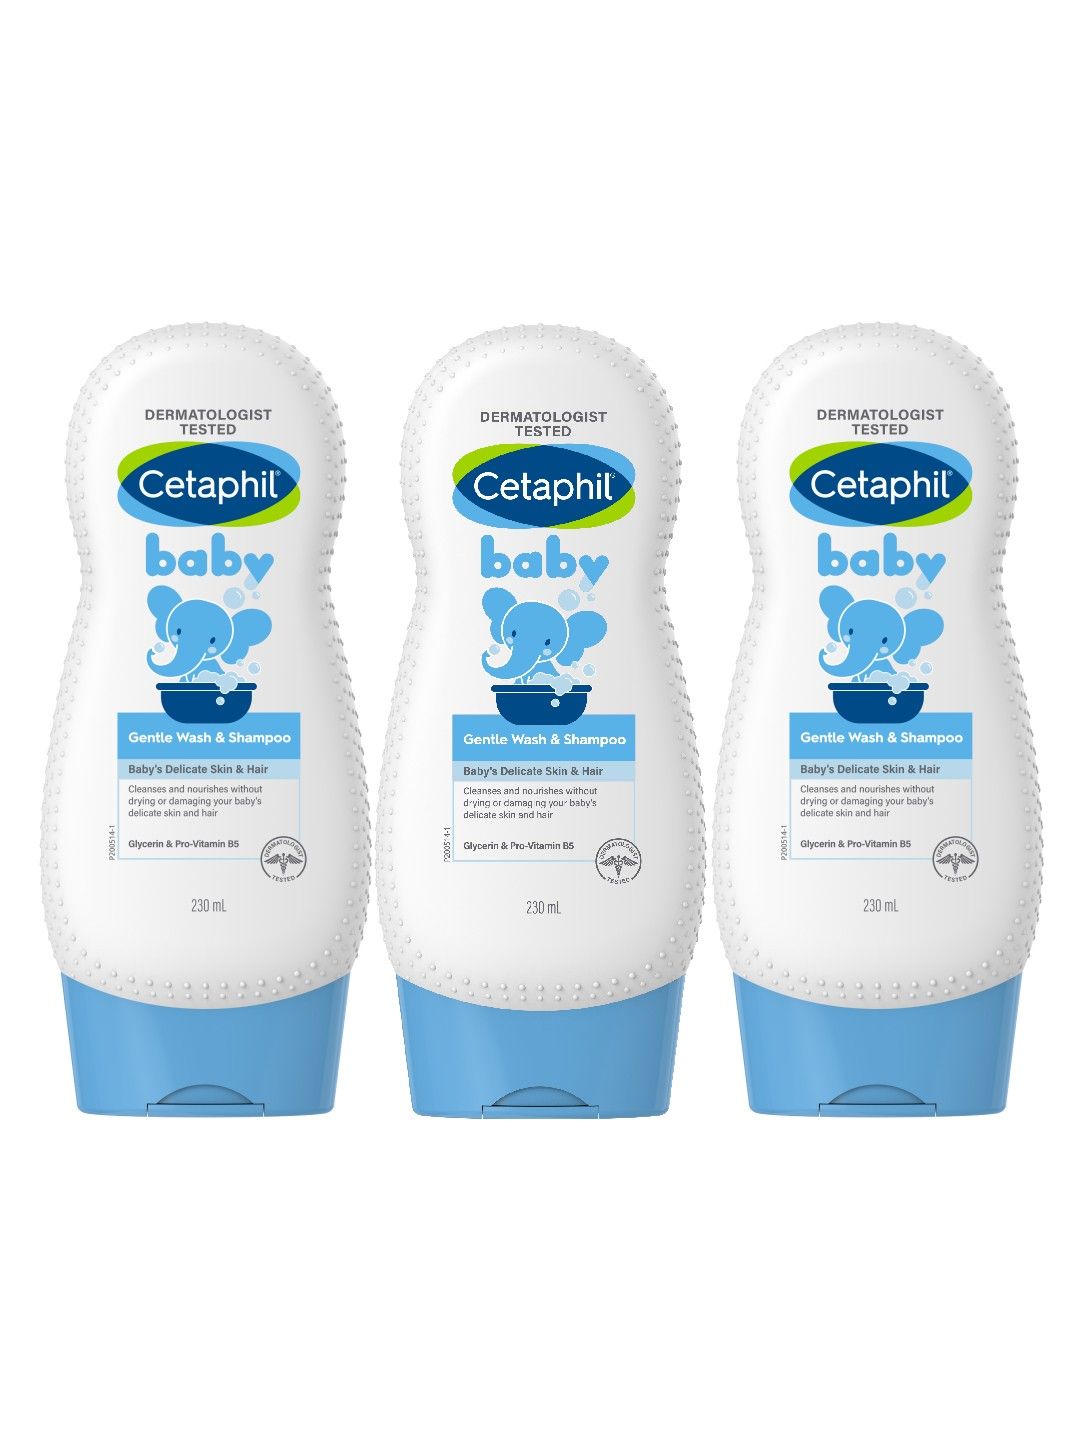 Cetaphil Baby Baby Gentle Wash & Shampoo (230ml) (3-pack)